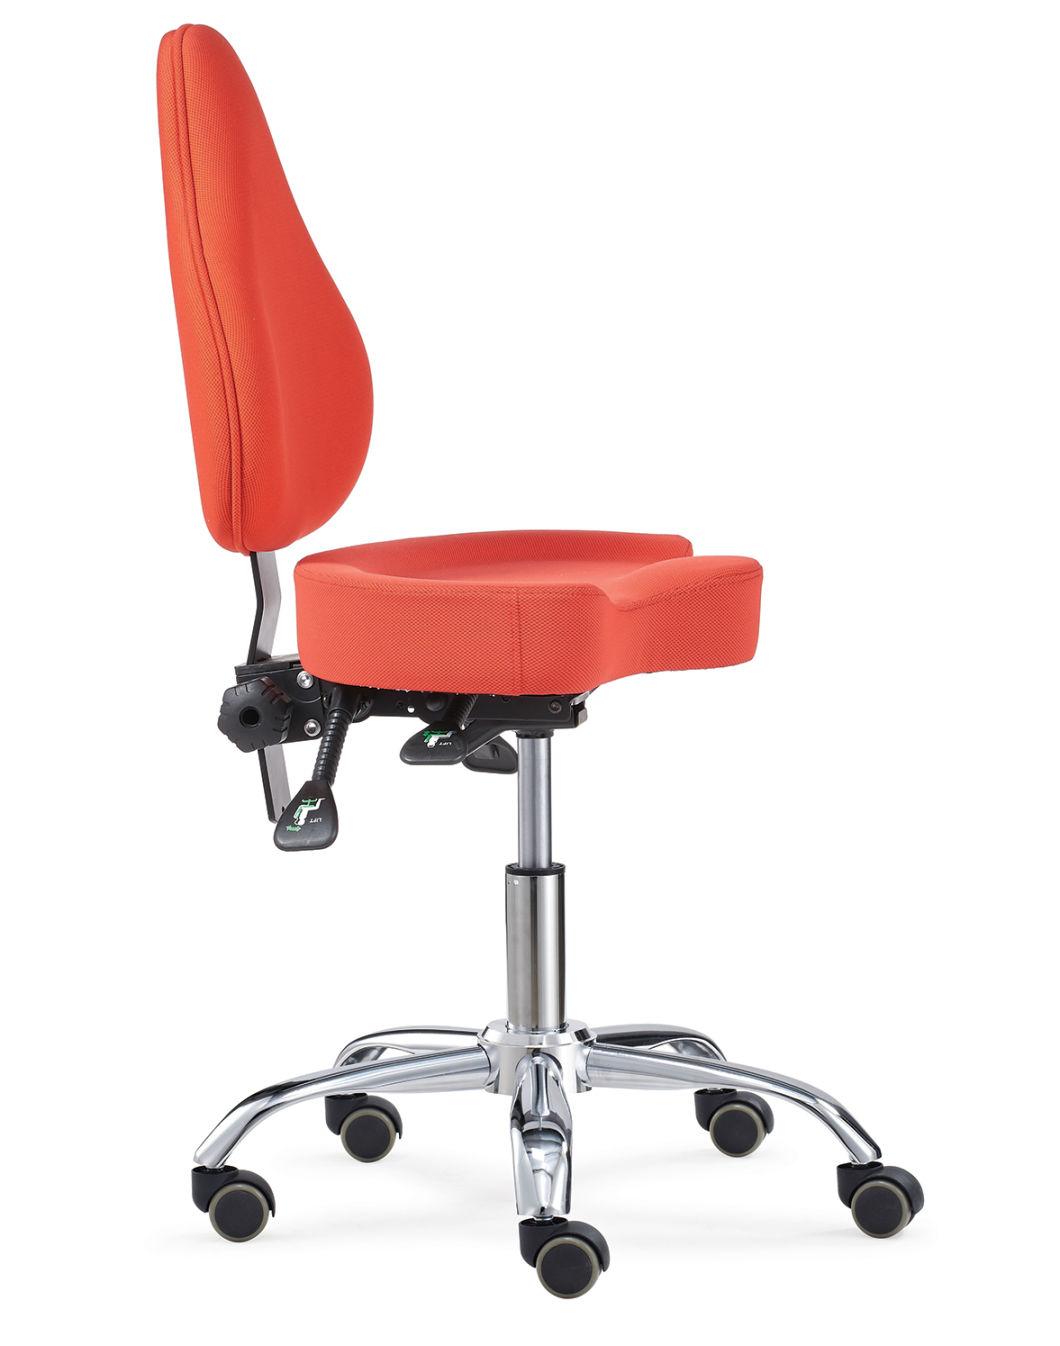 Ergonomic Office Chair Mesh Desk Chair Task Computer Chair